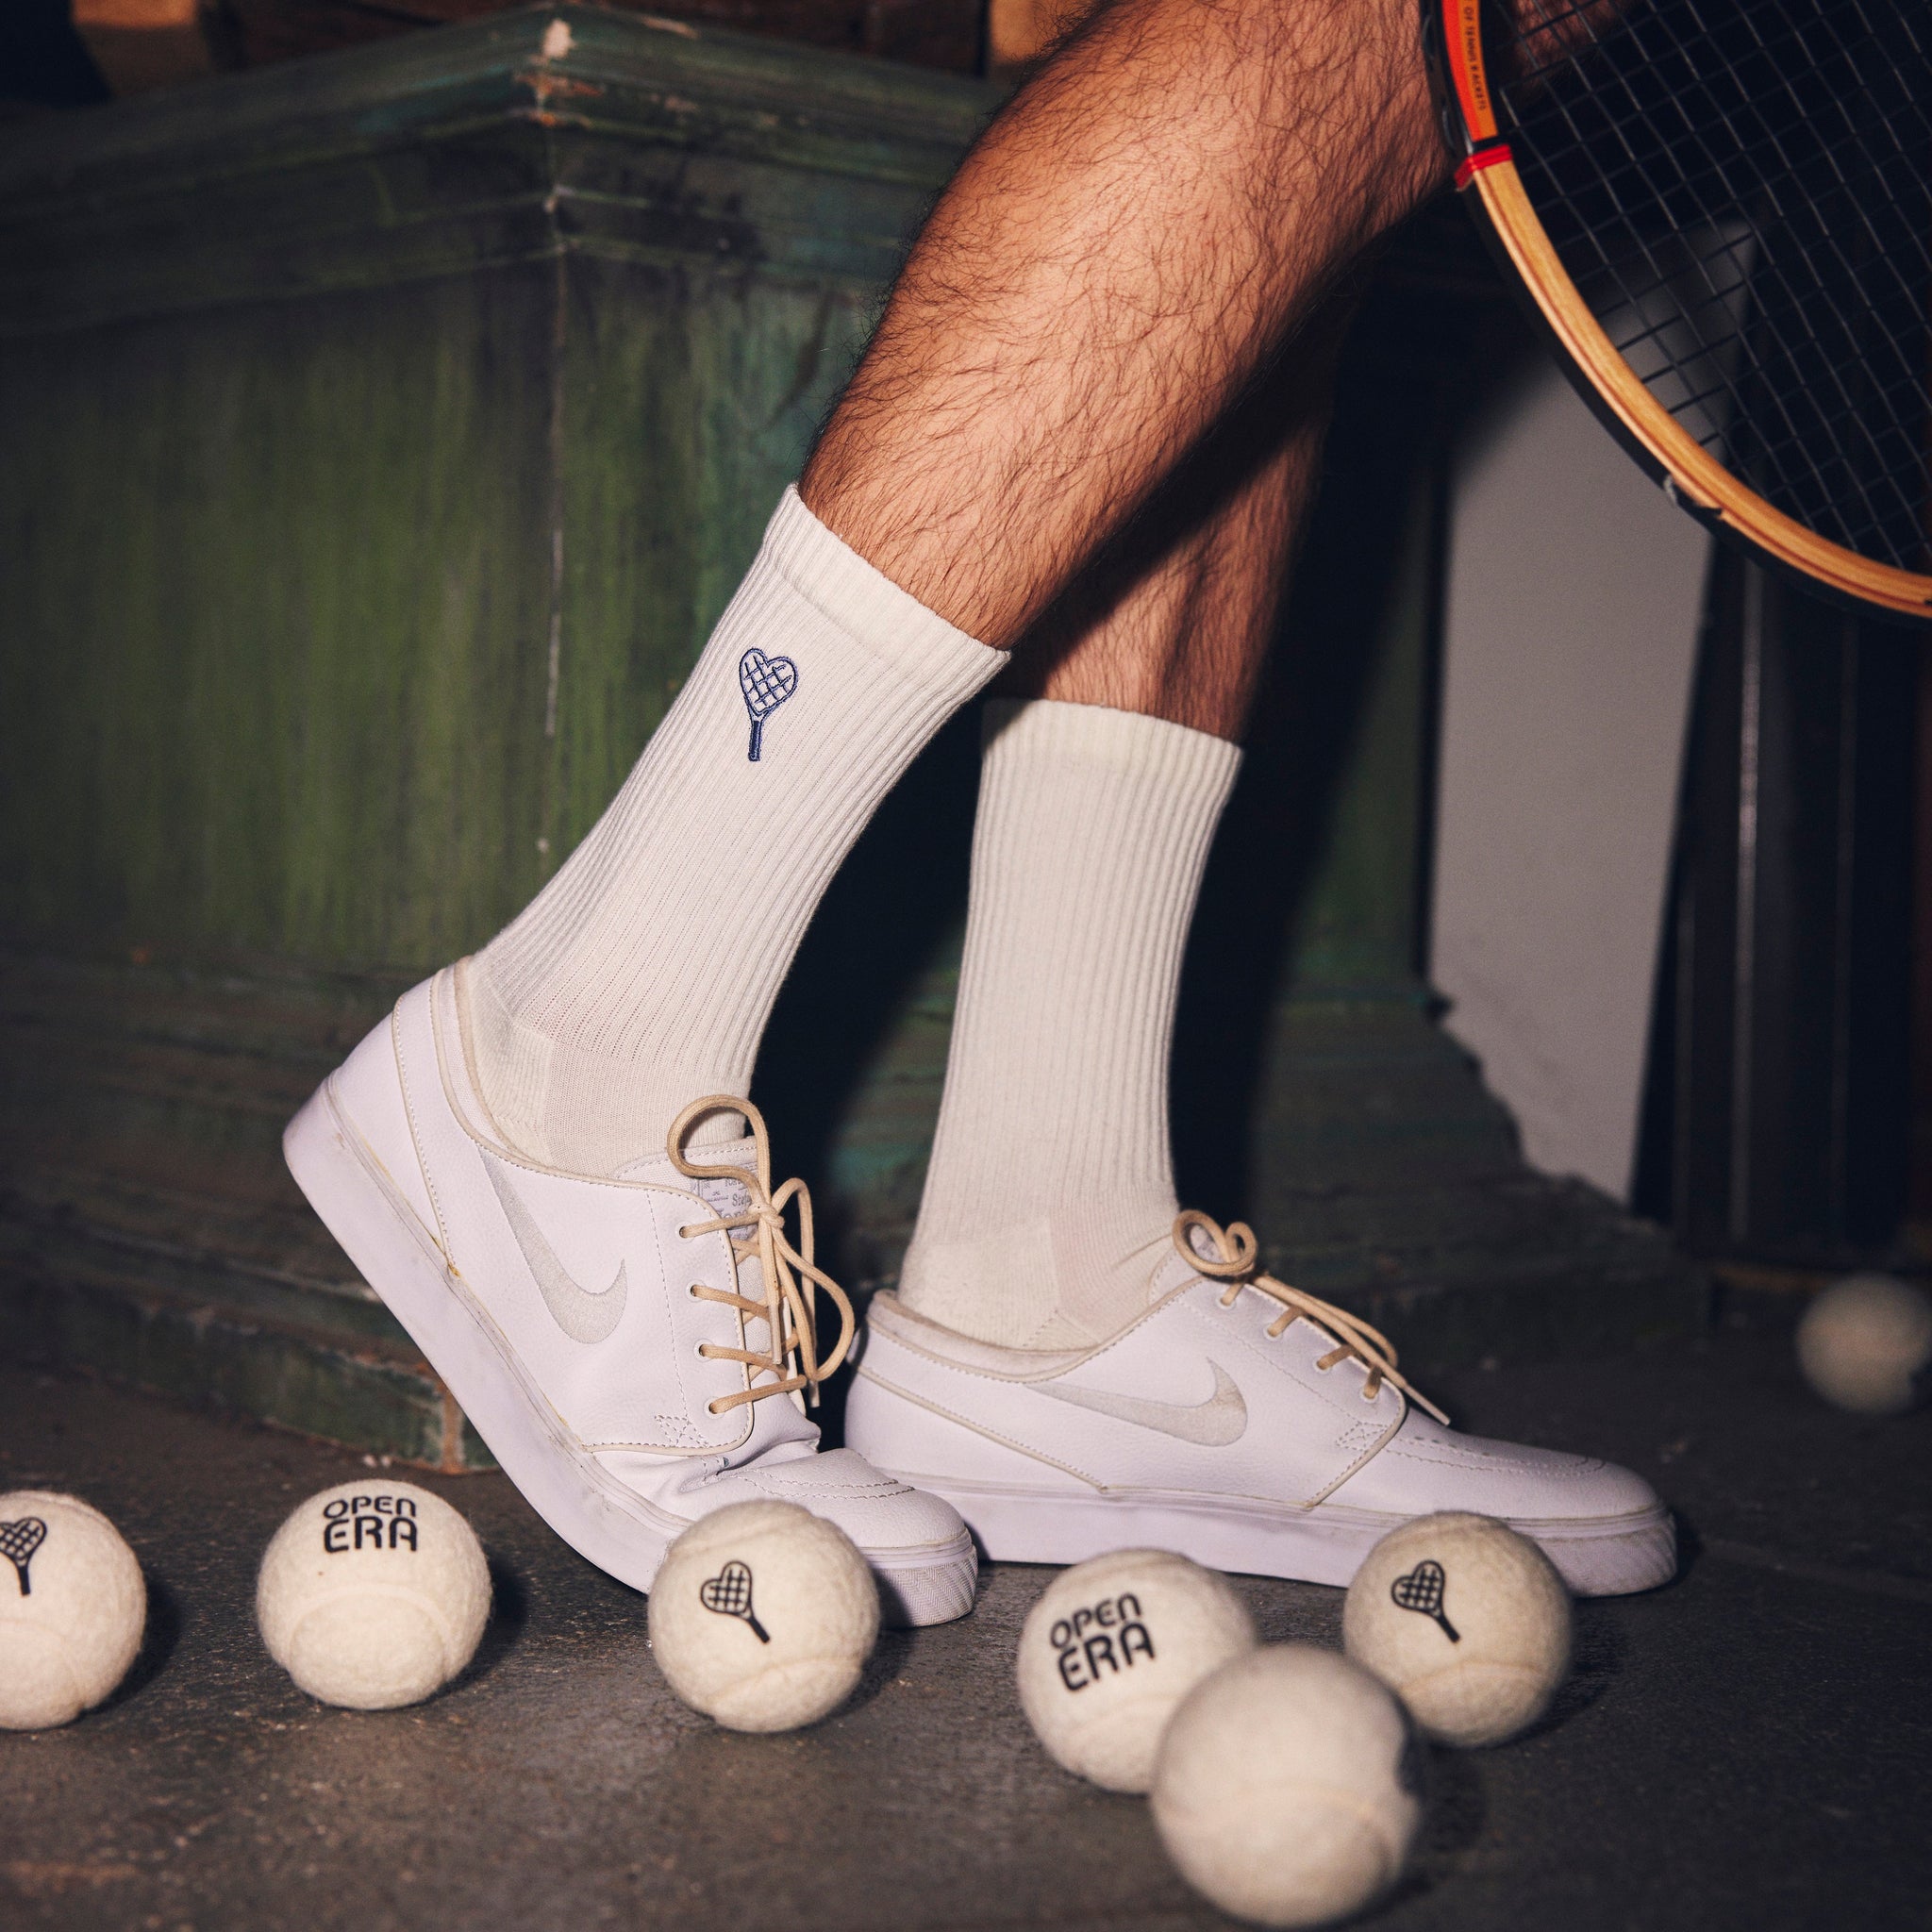 Tennis socks